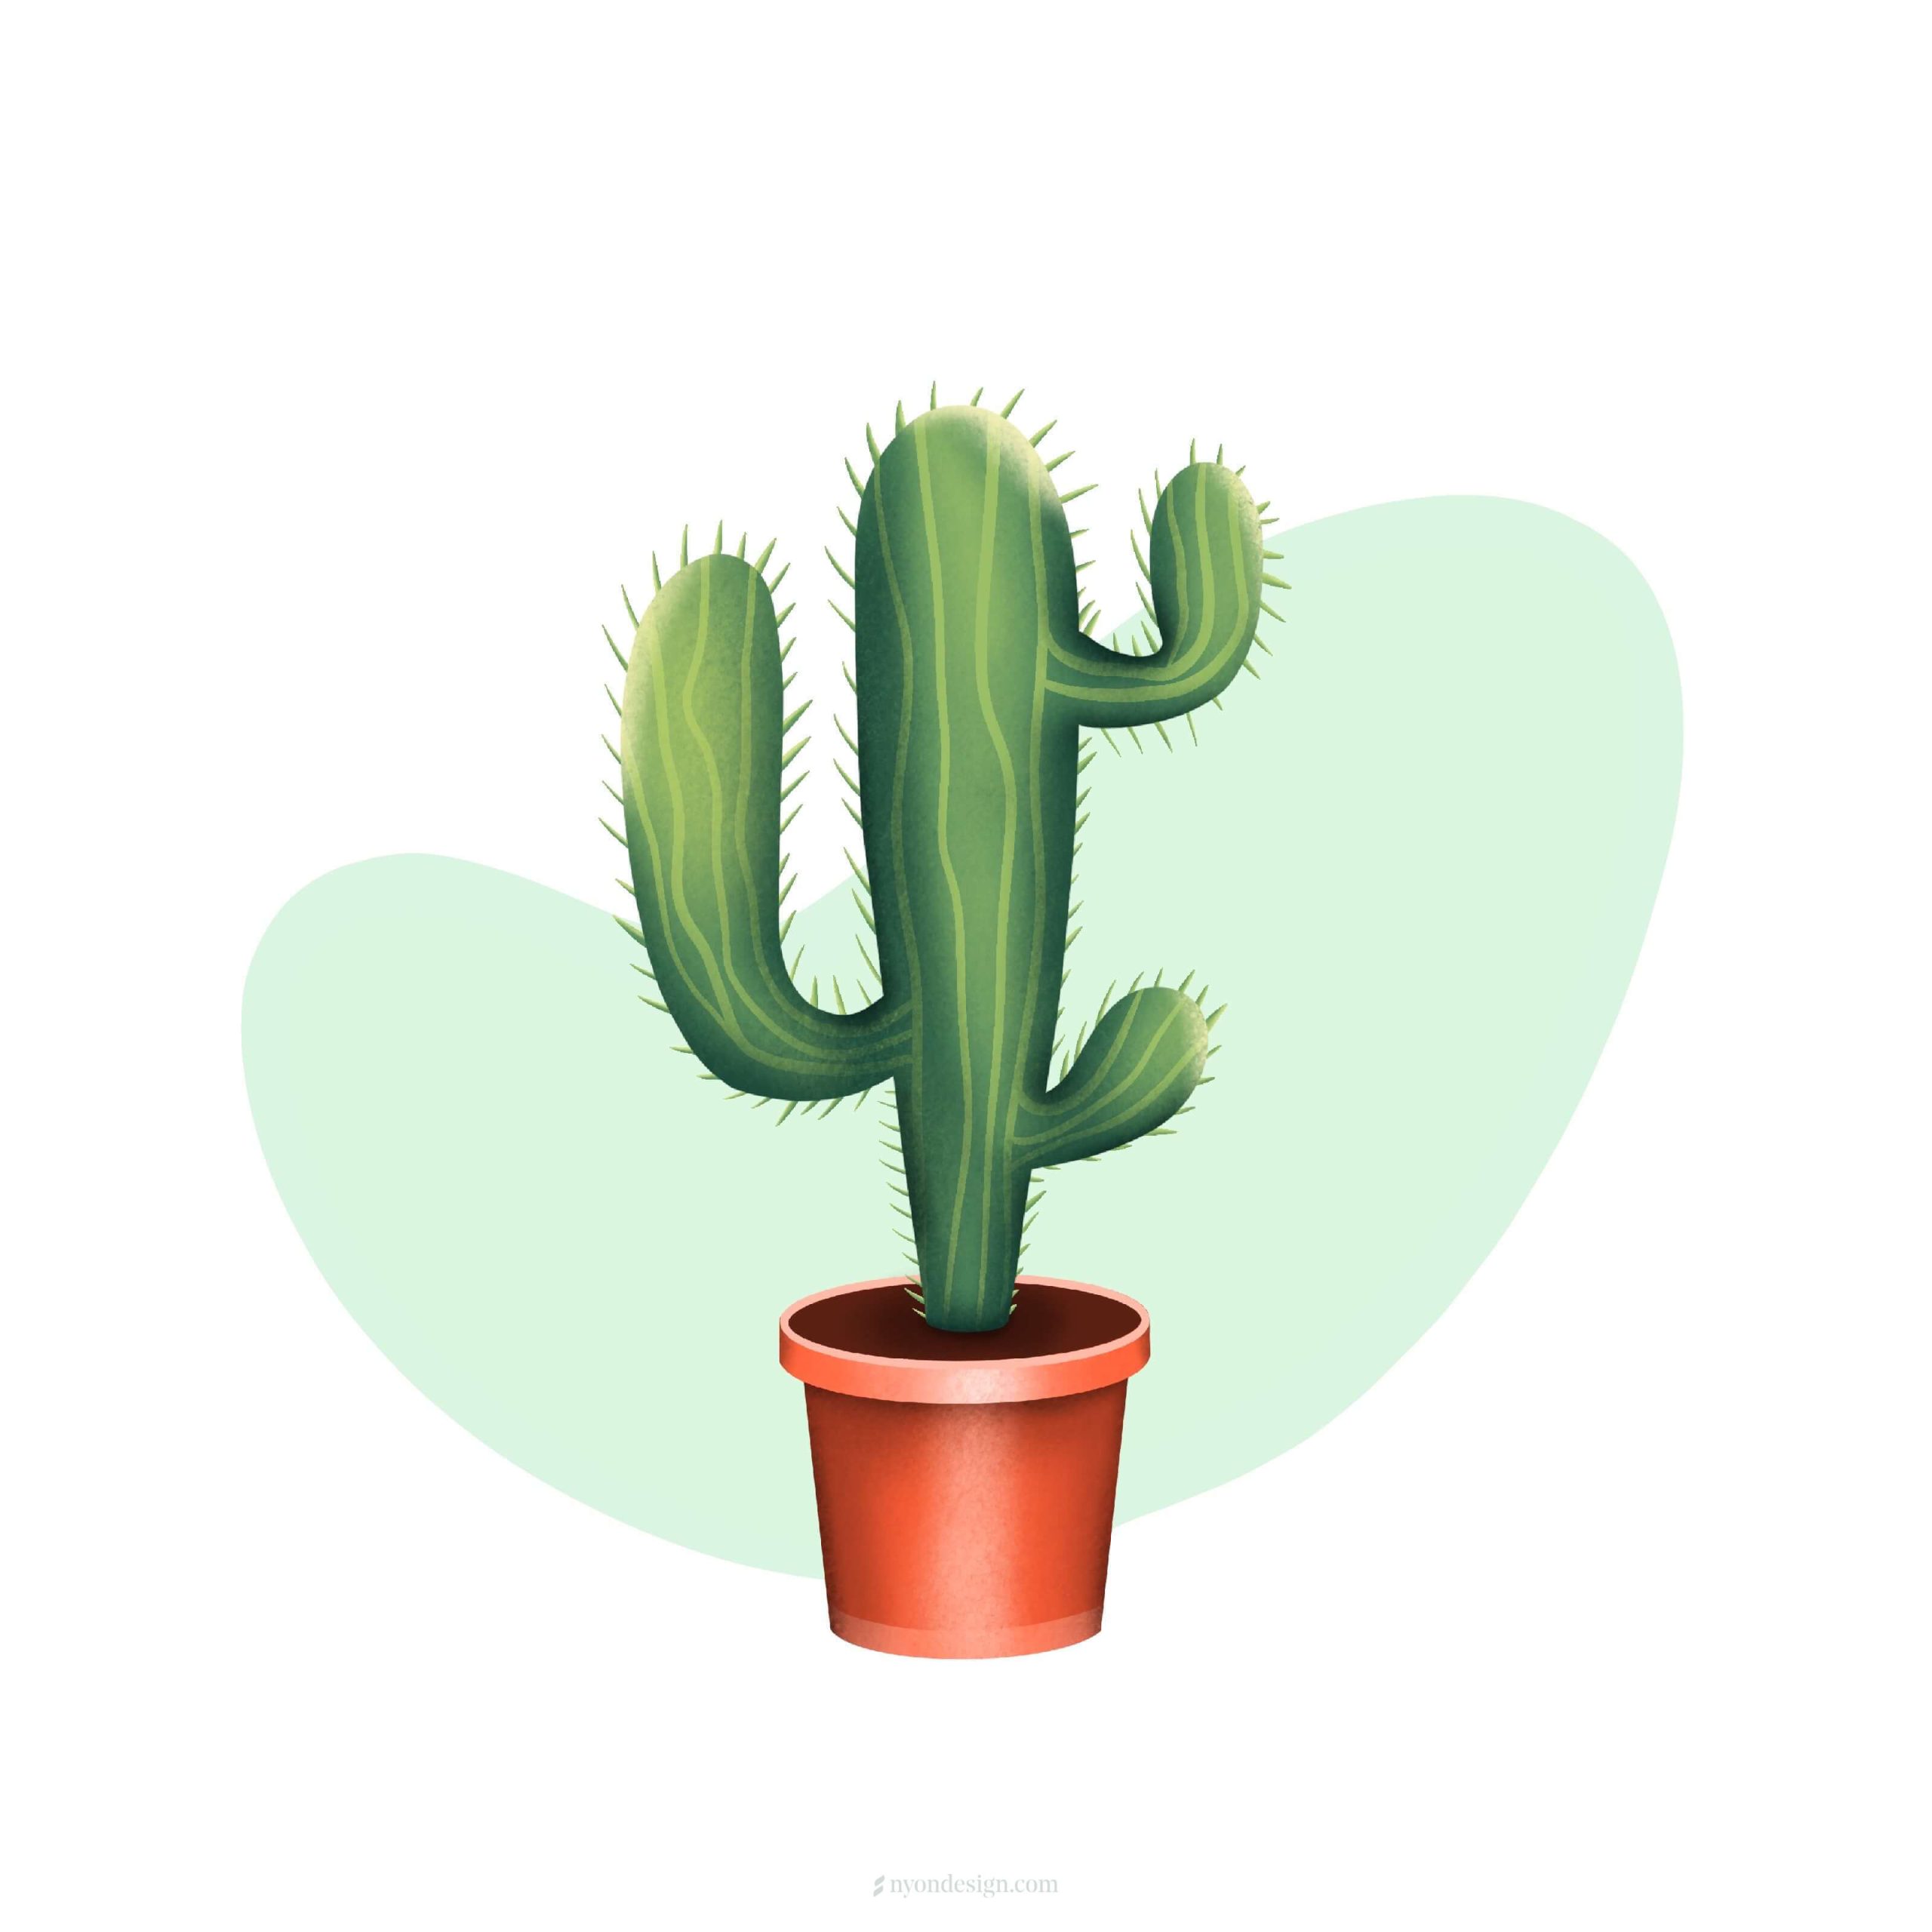 Cactus - Illustration - NYon design